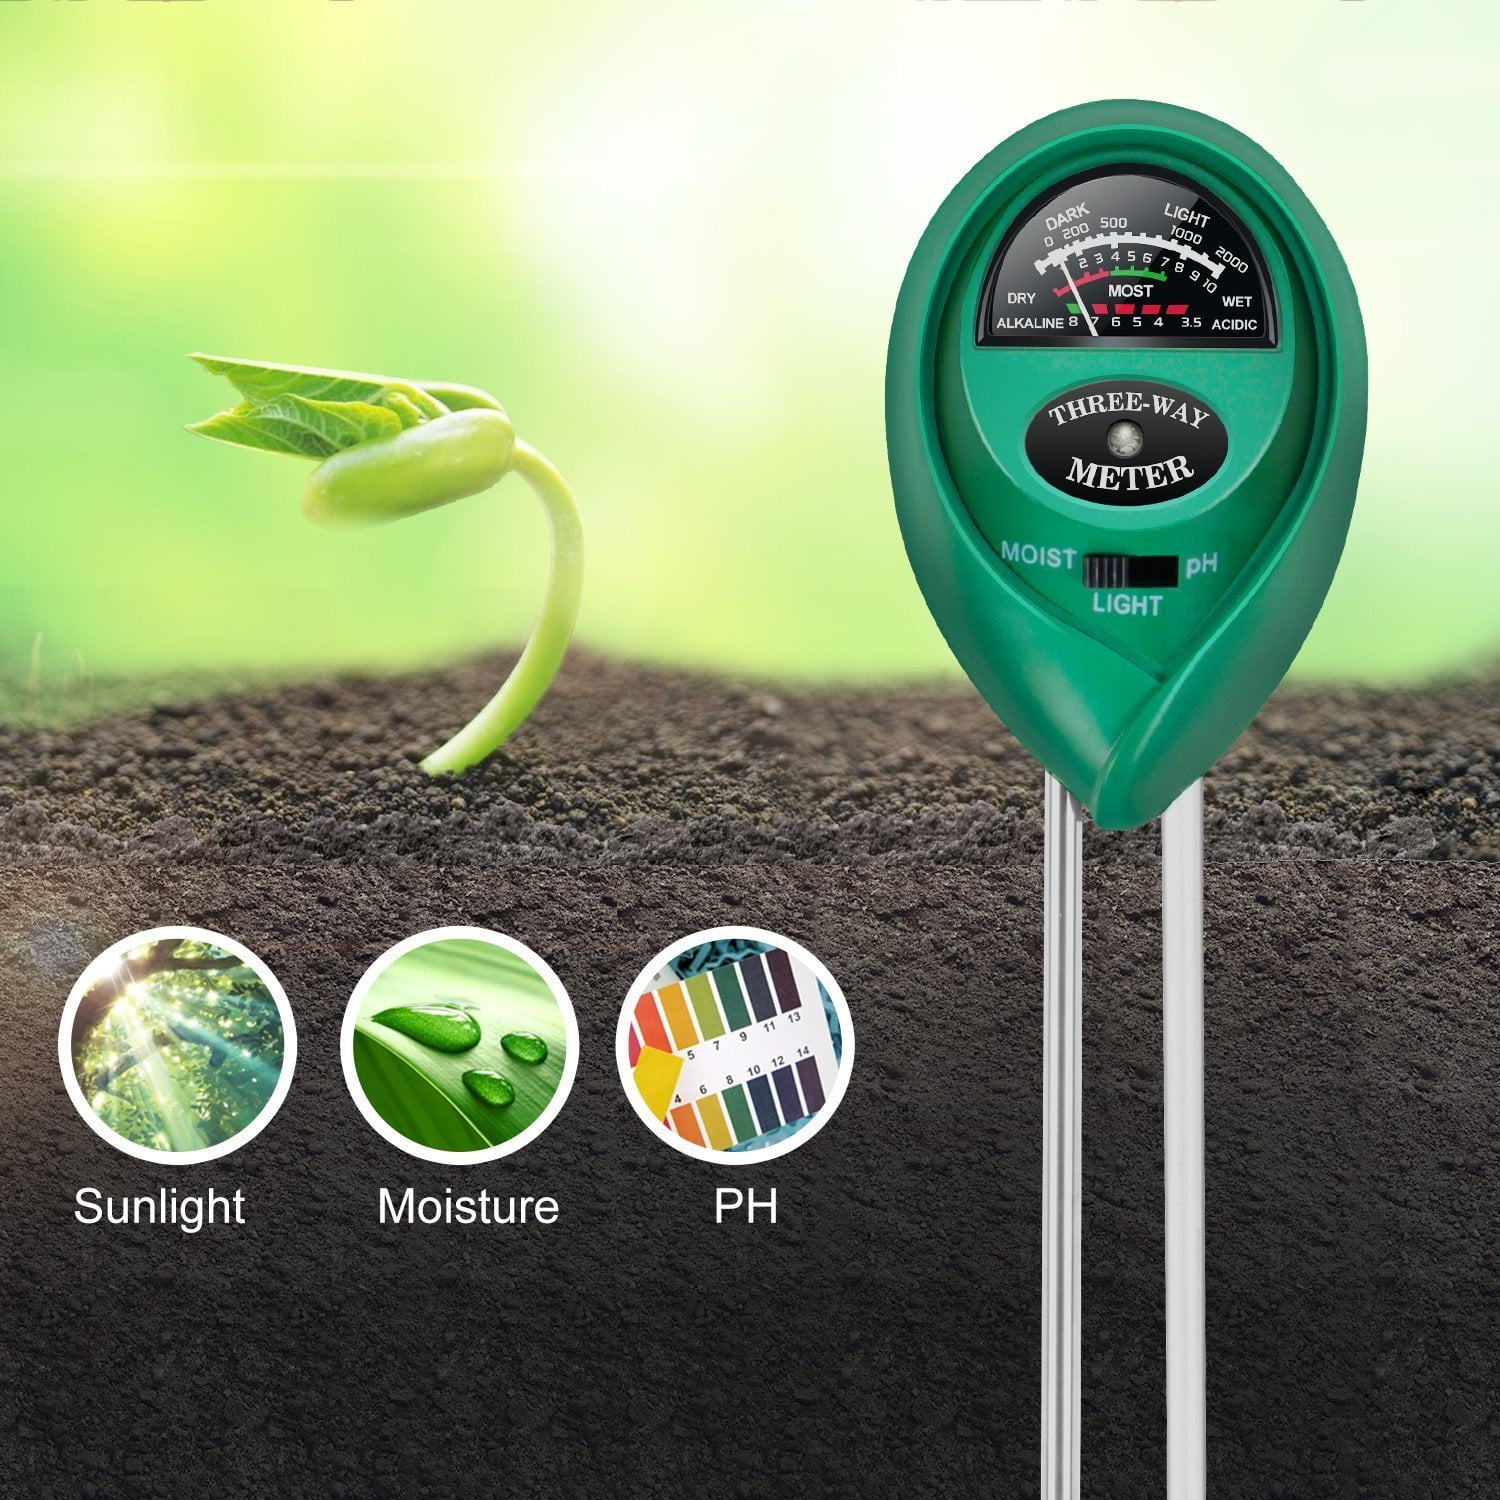 Details about   3 in 1 Soil Tester PH Water Moisture Light Test Meter Tool Garden Plant Seeding 